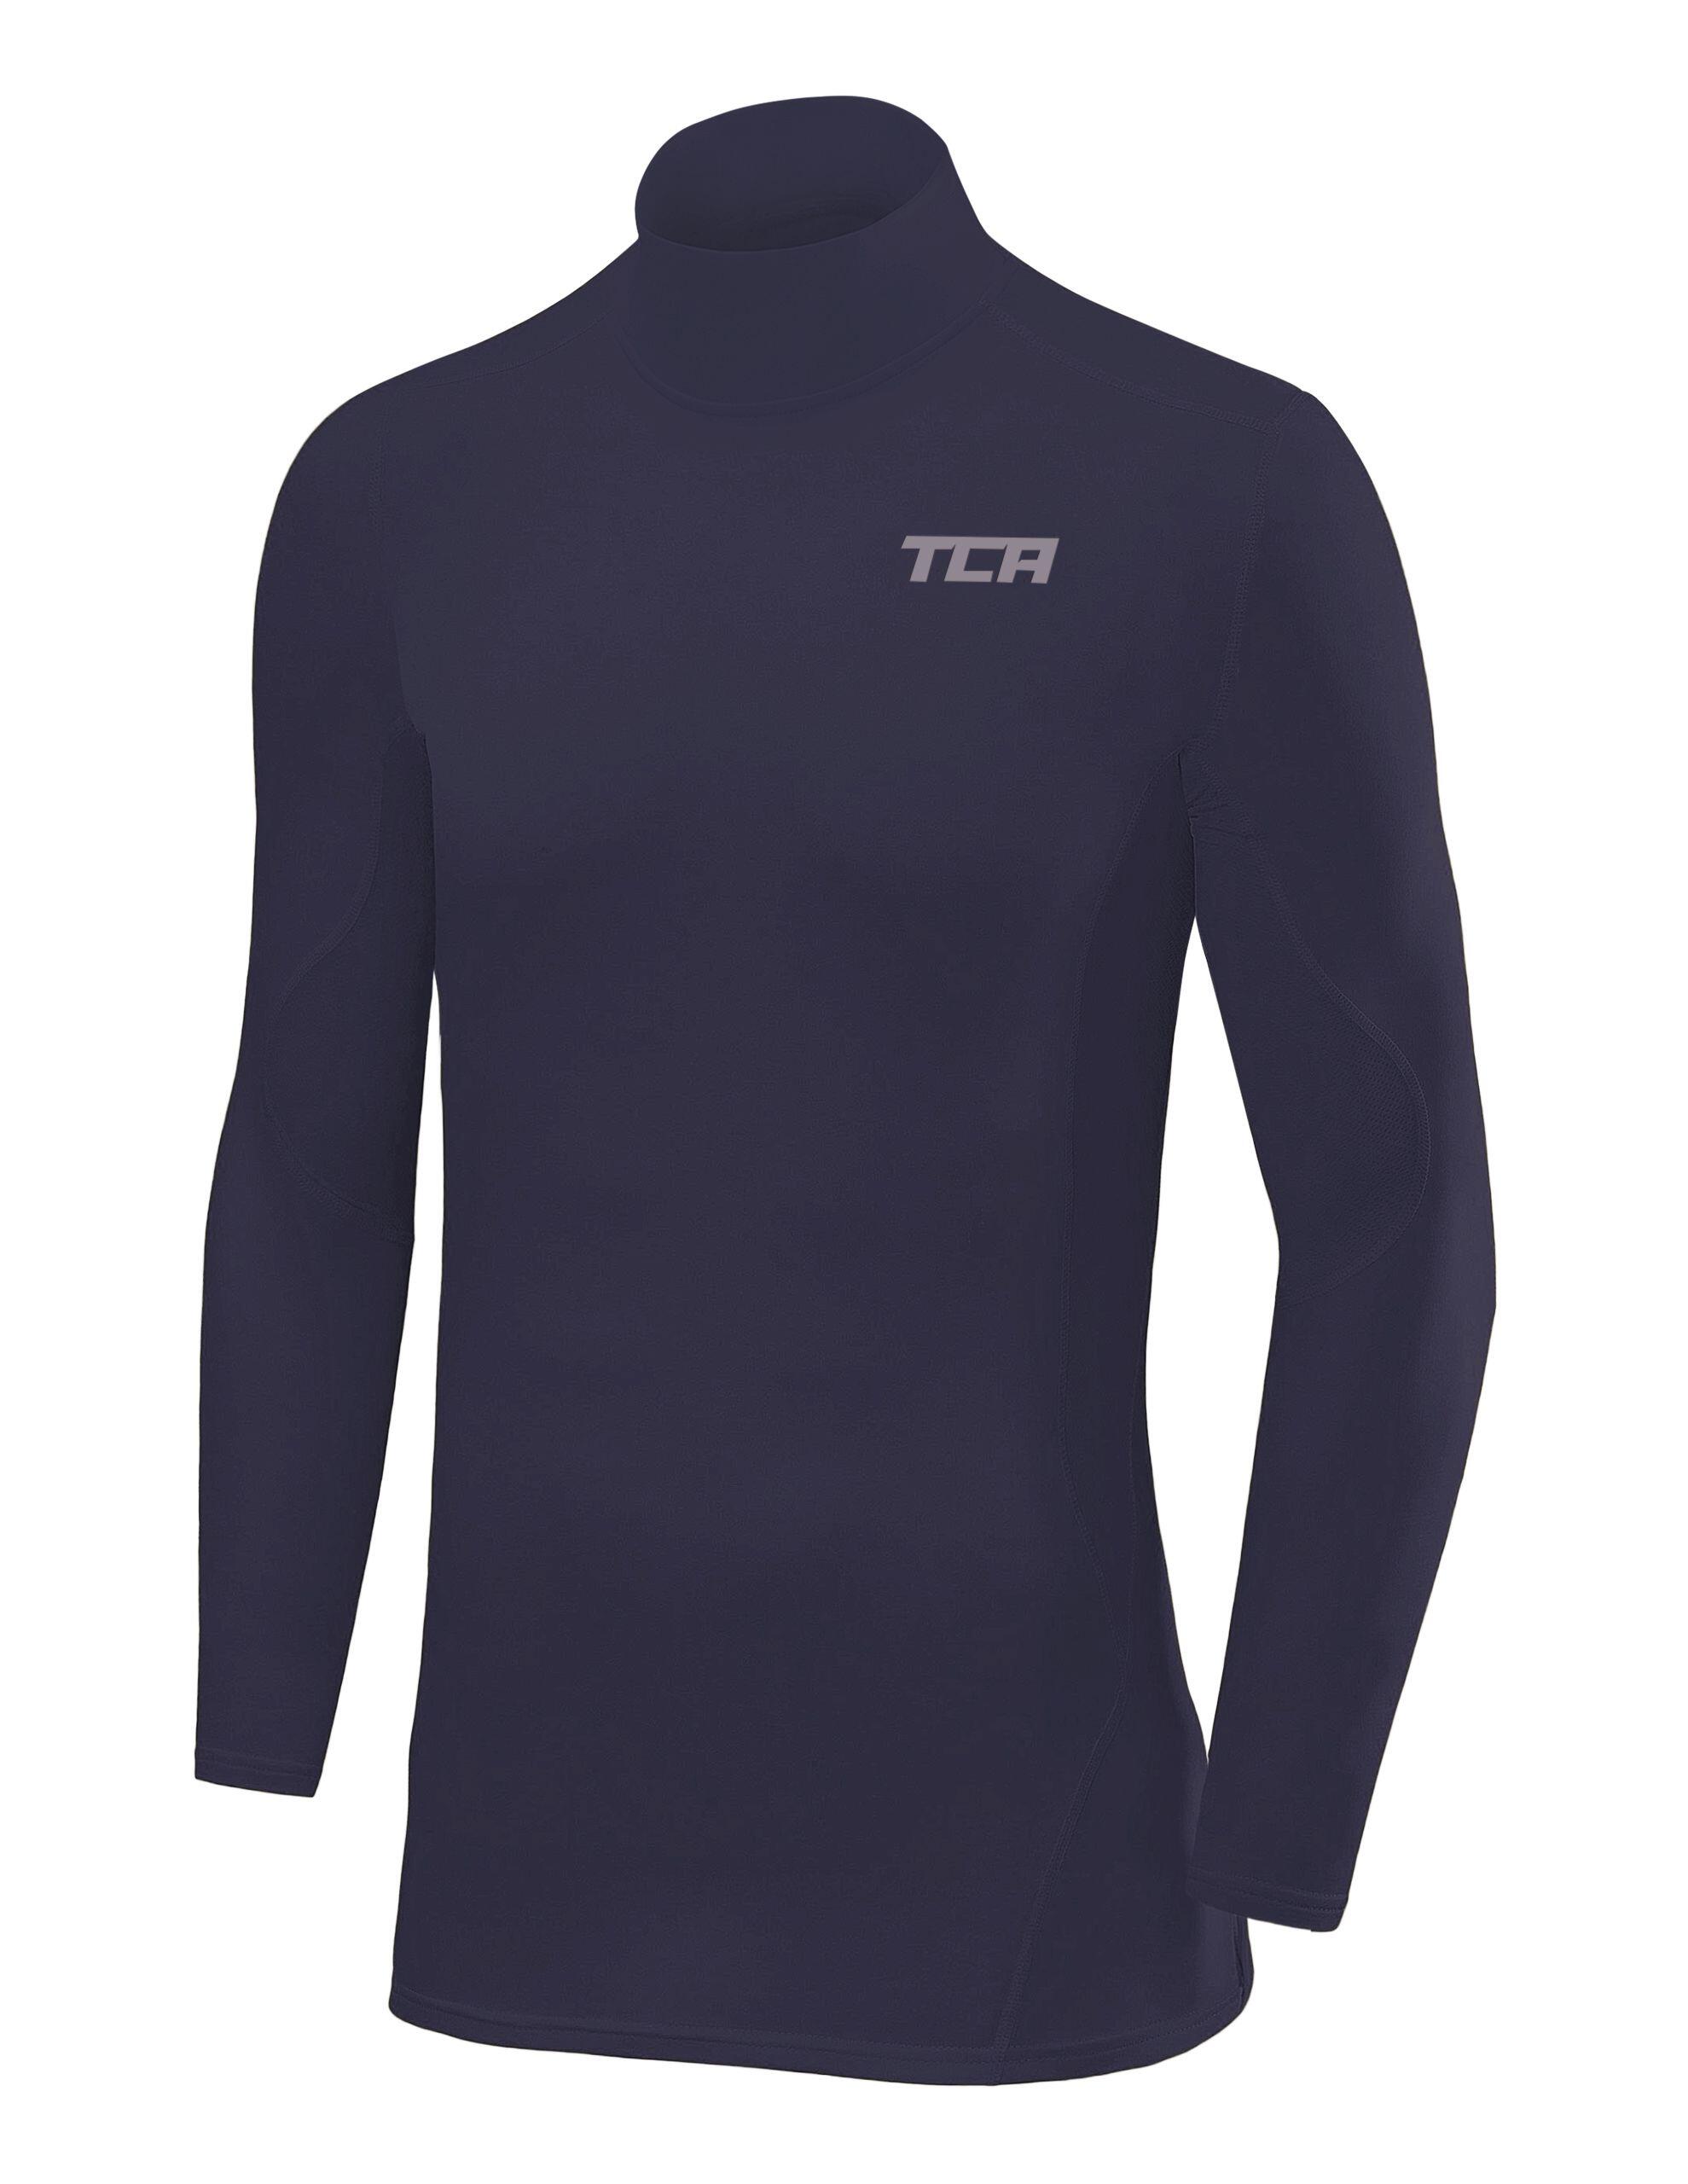 TCA Boys' Super Thermal Base Sleeve Top - Mock - Graphite